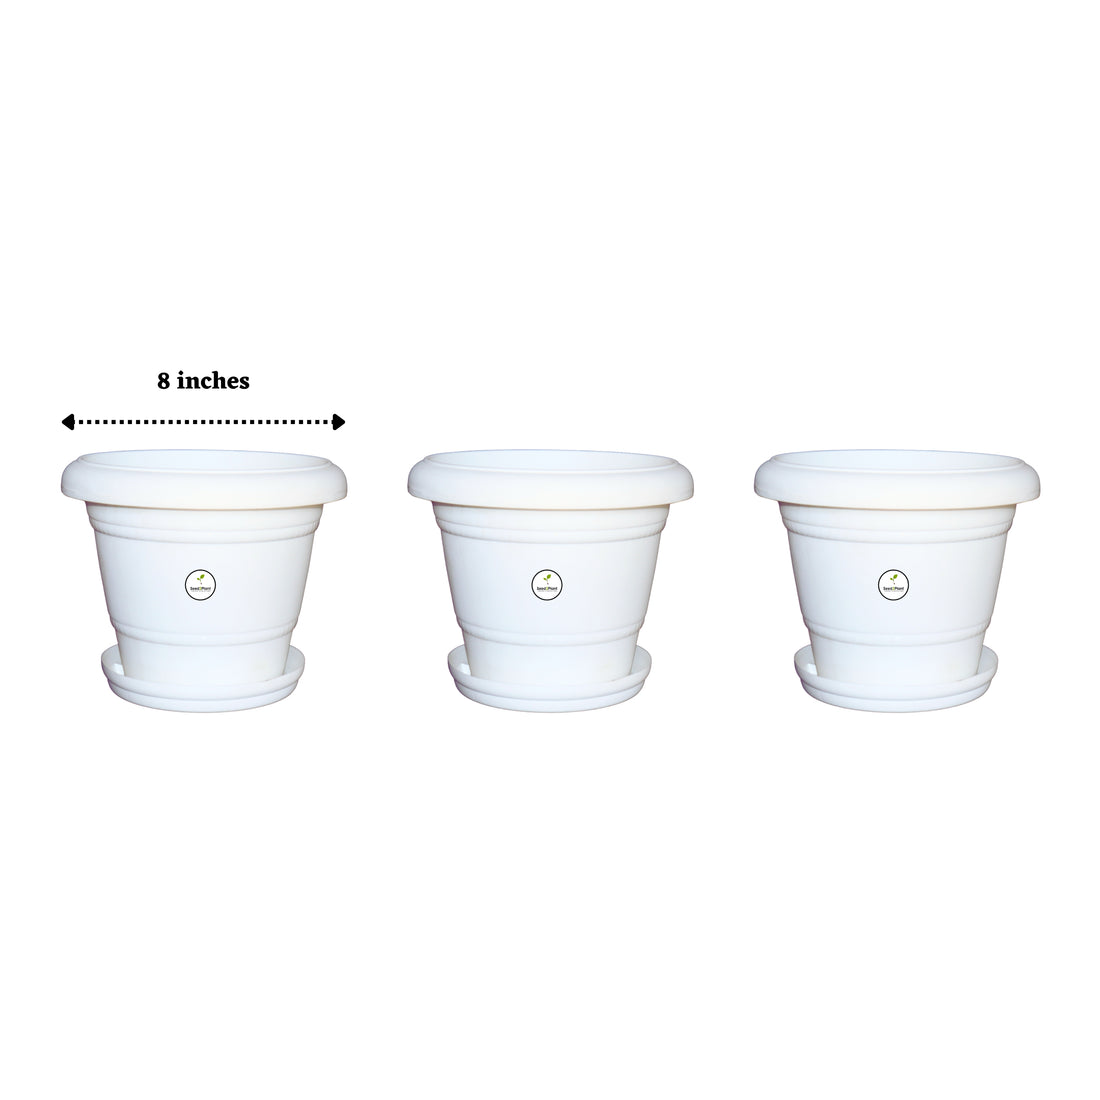 8 Inch UV Treated Plastic Pots - White Colour